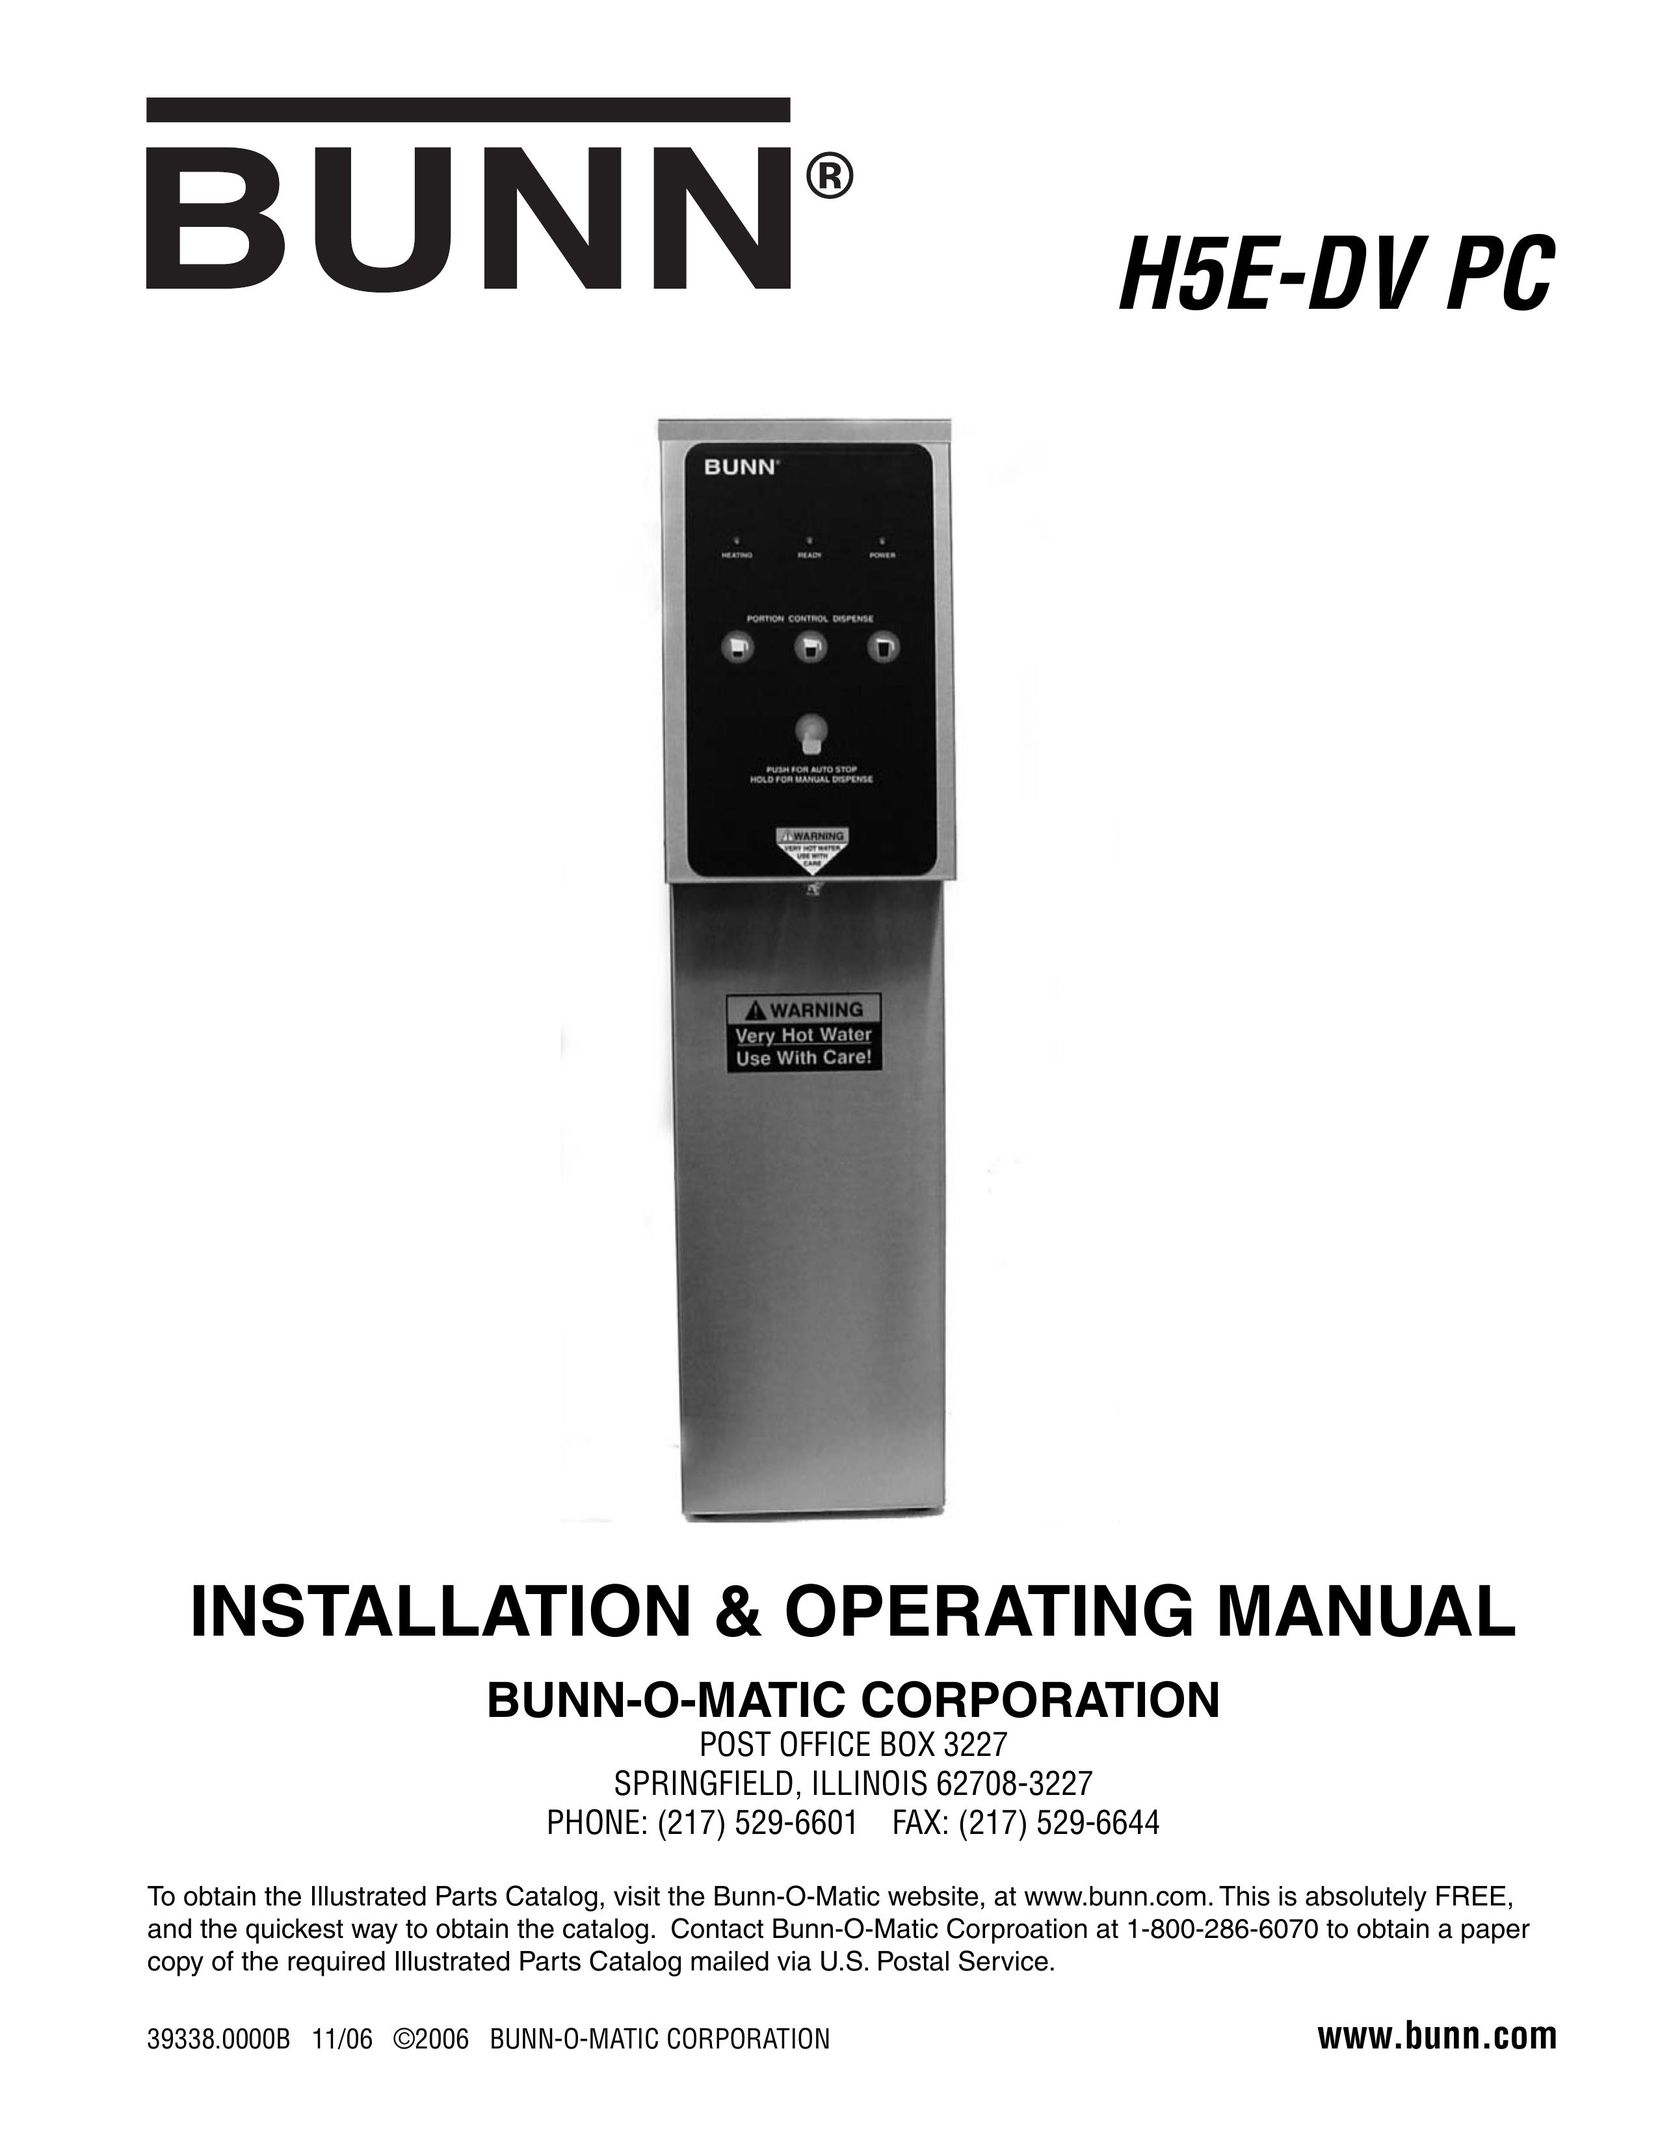 Bunn H5E-DV PC Water Heater User Manual